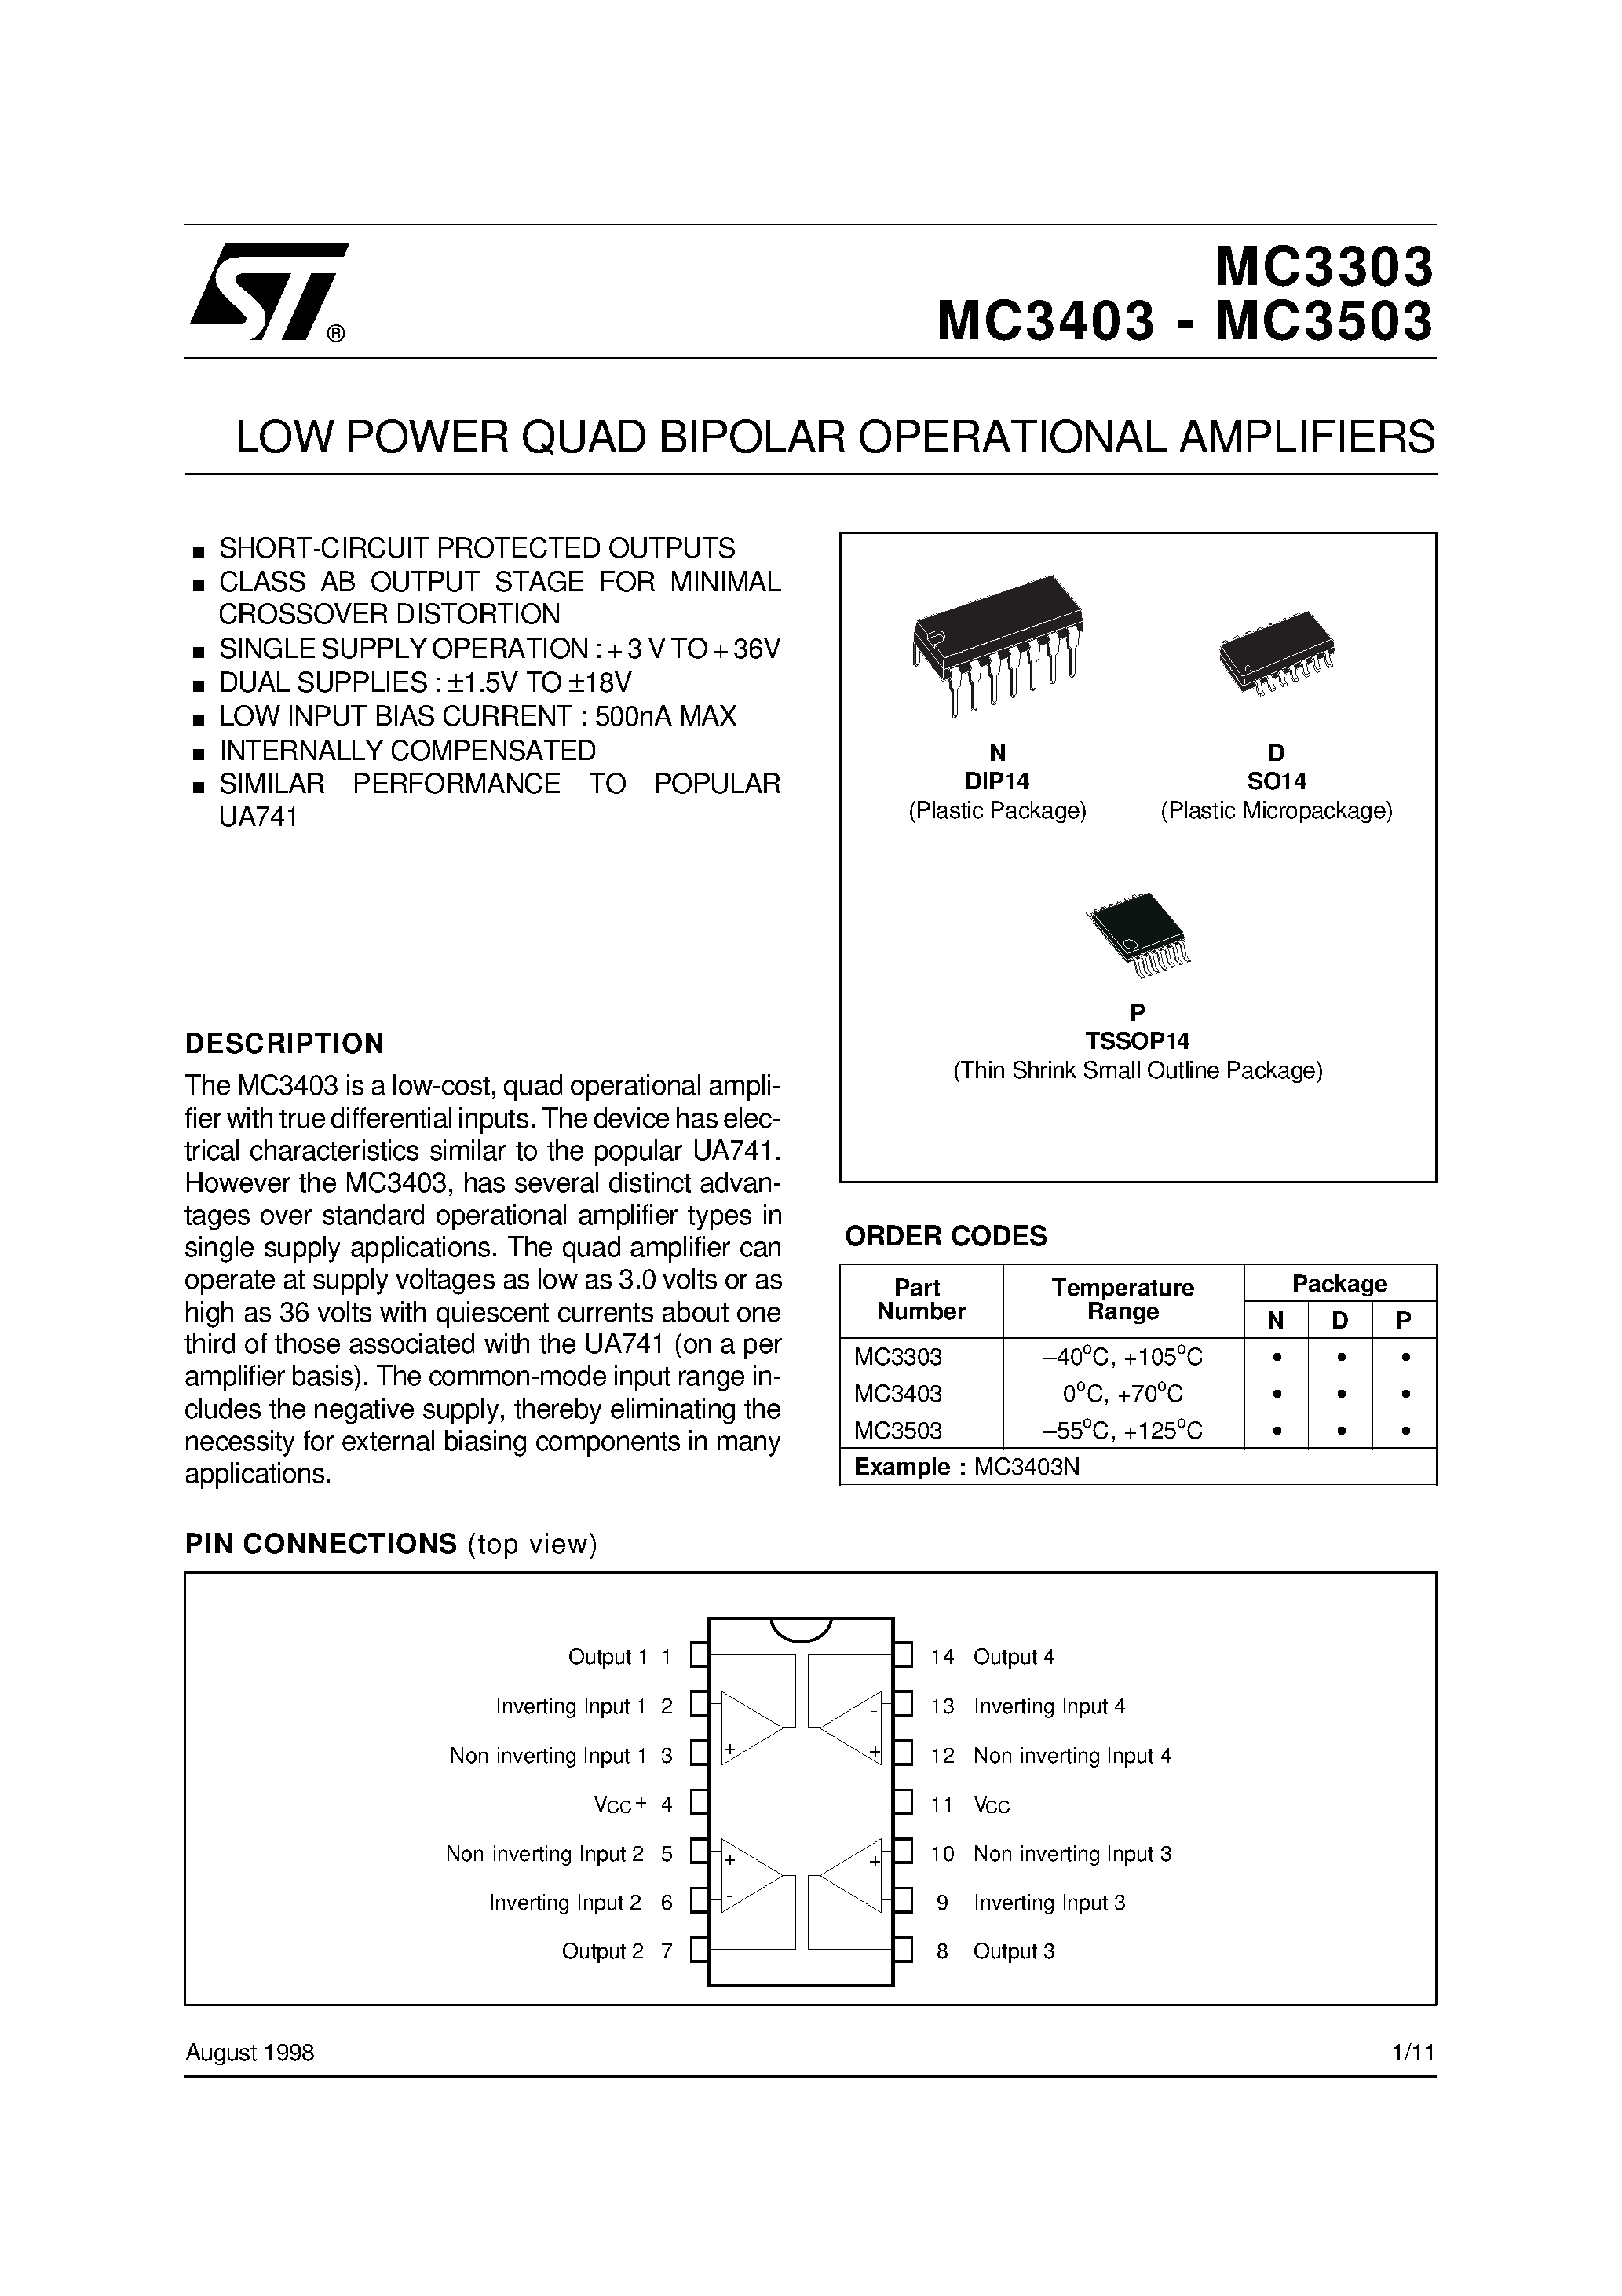 Datasheet MC3403 - LOW POWER QUAD BIPOLAR OPERATIONAL AMPLIFIERS page 1